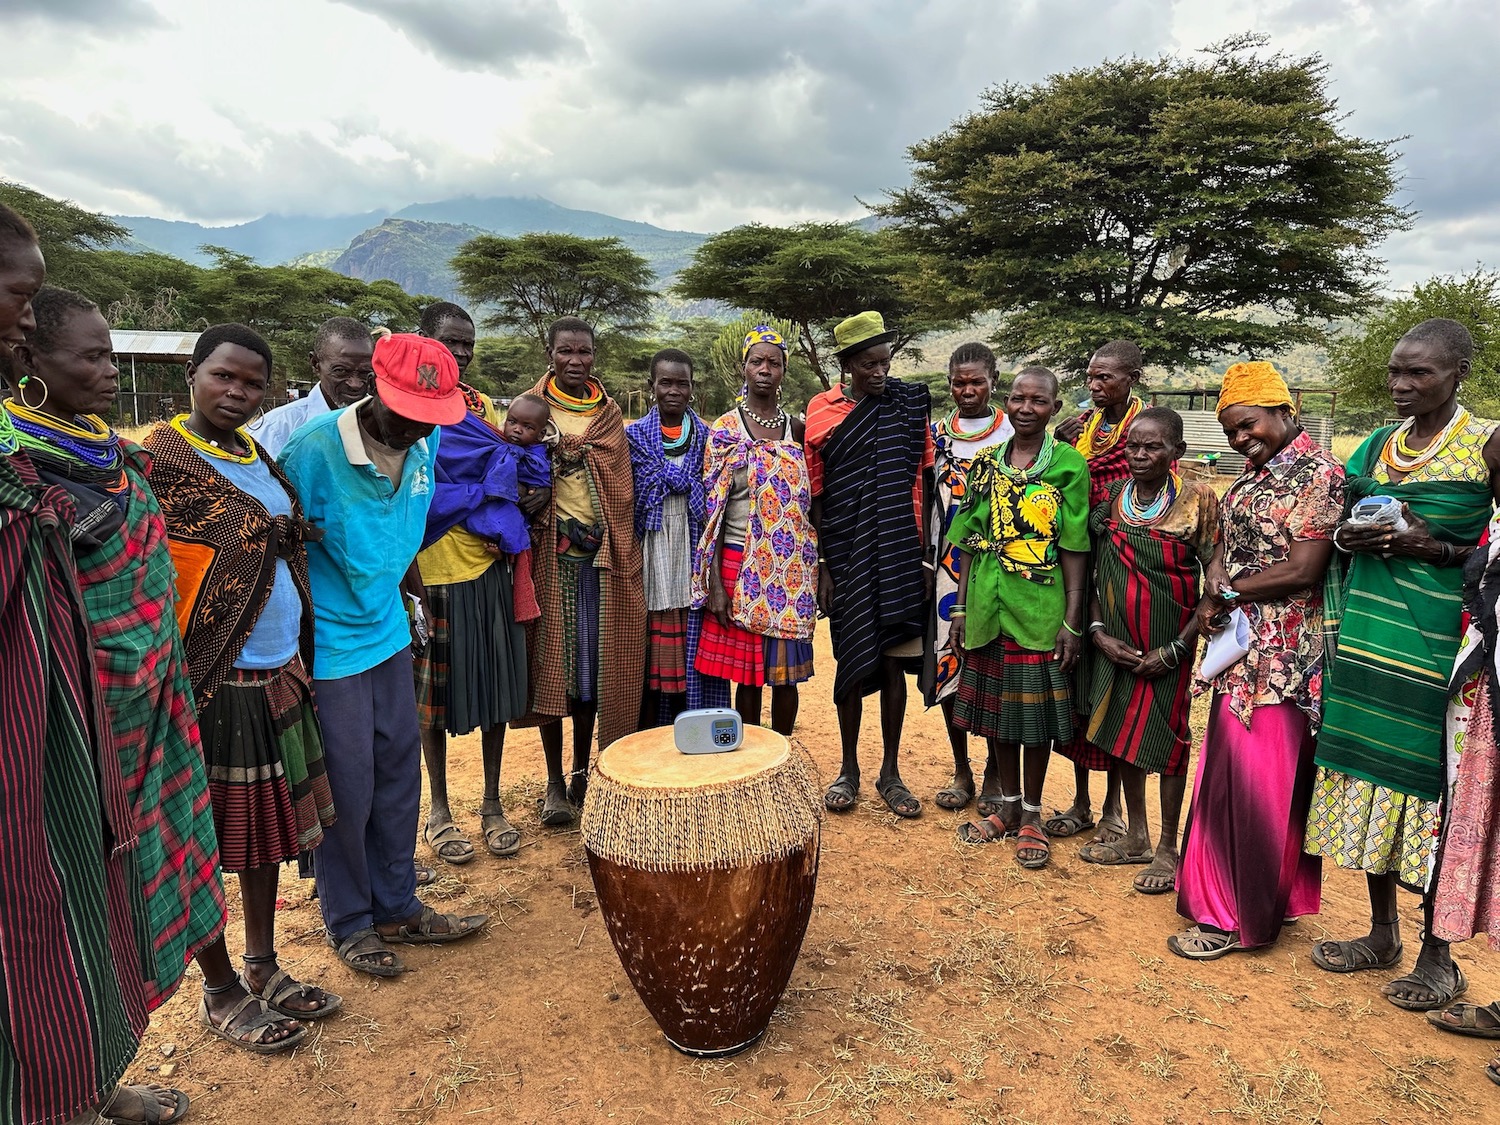 Revival in Uganda: How Village Players Help Spread the Gospel